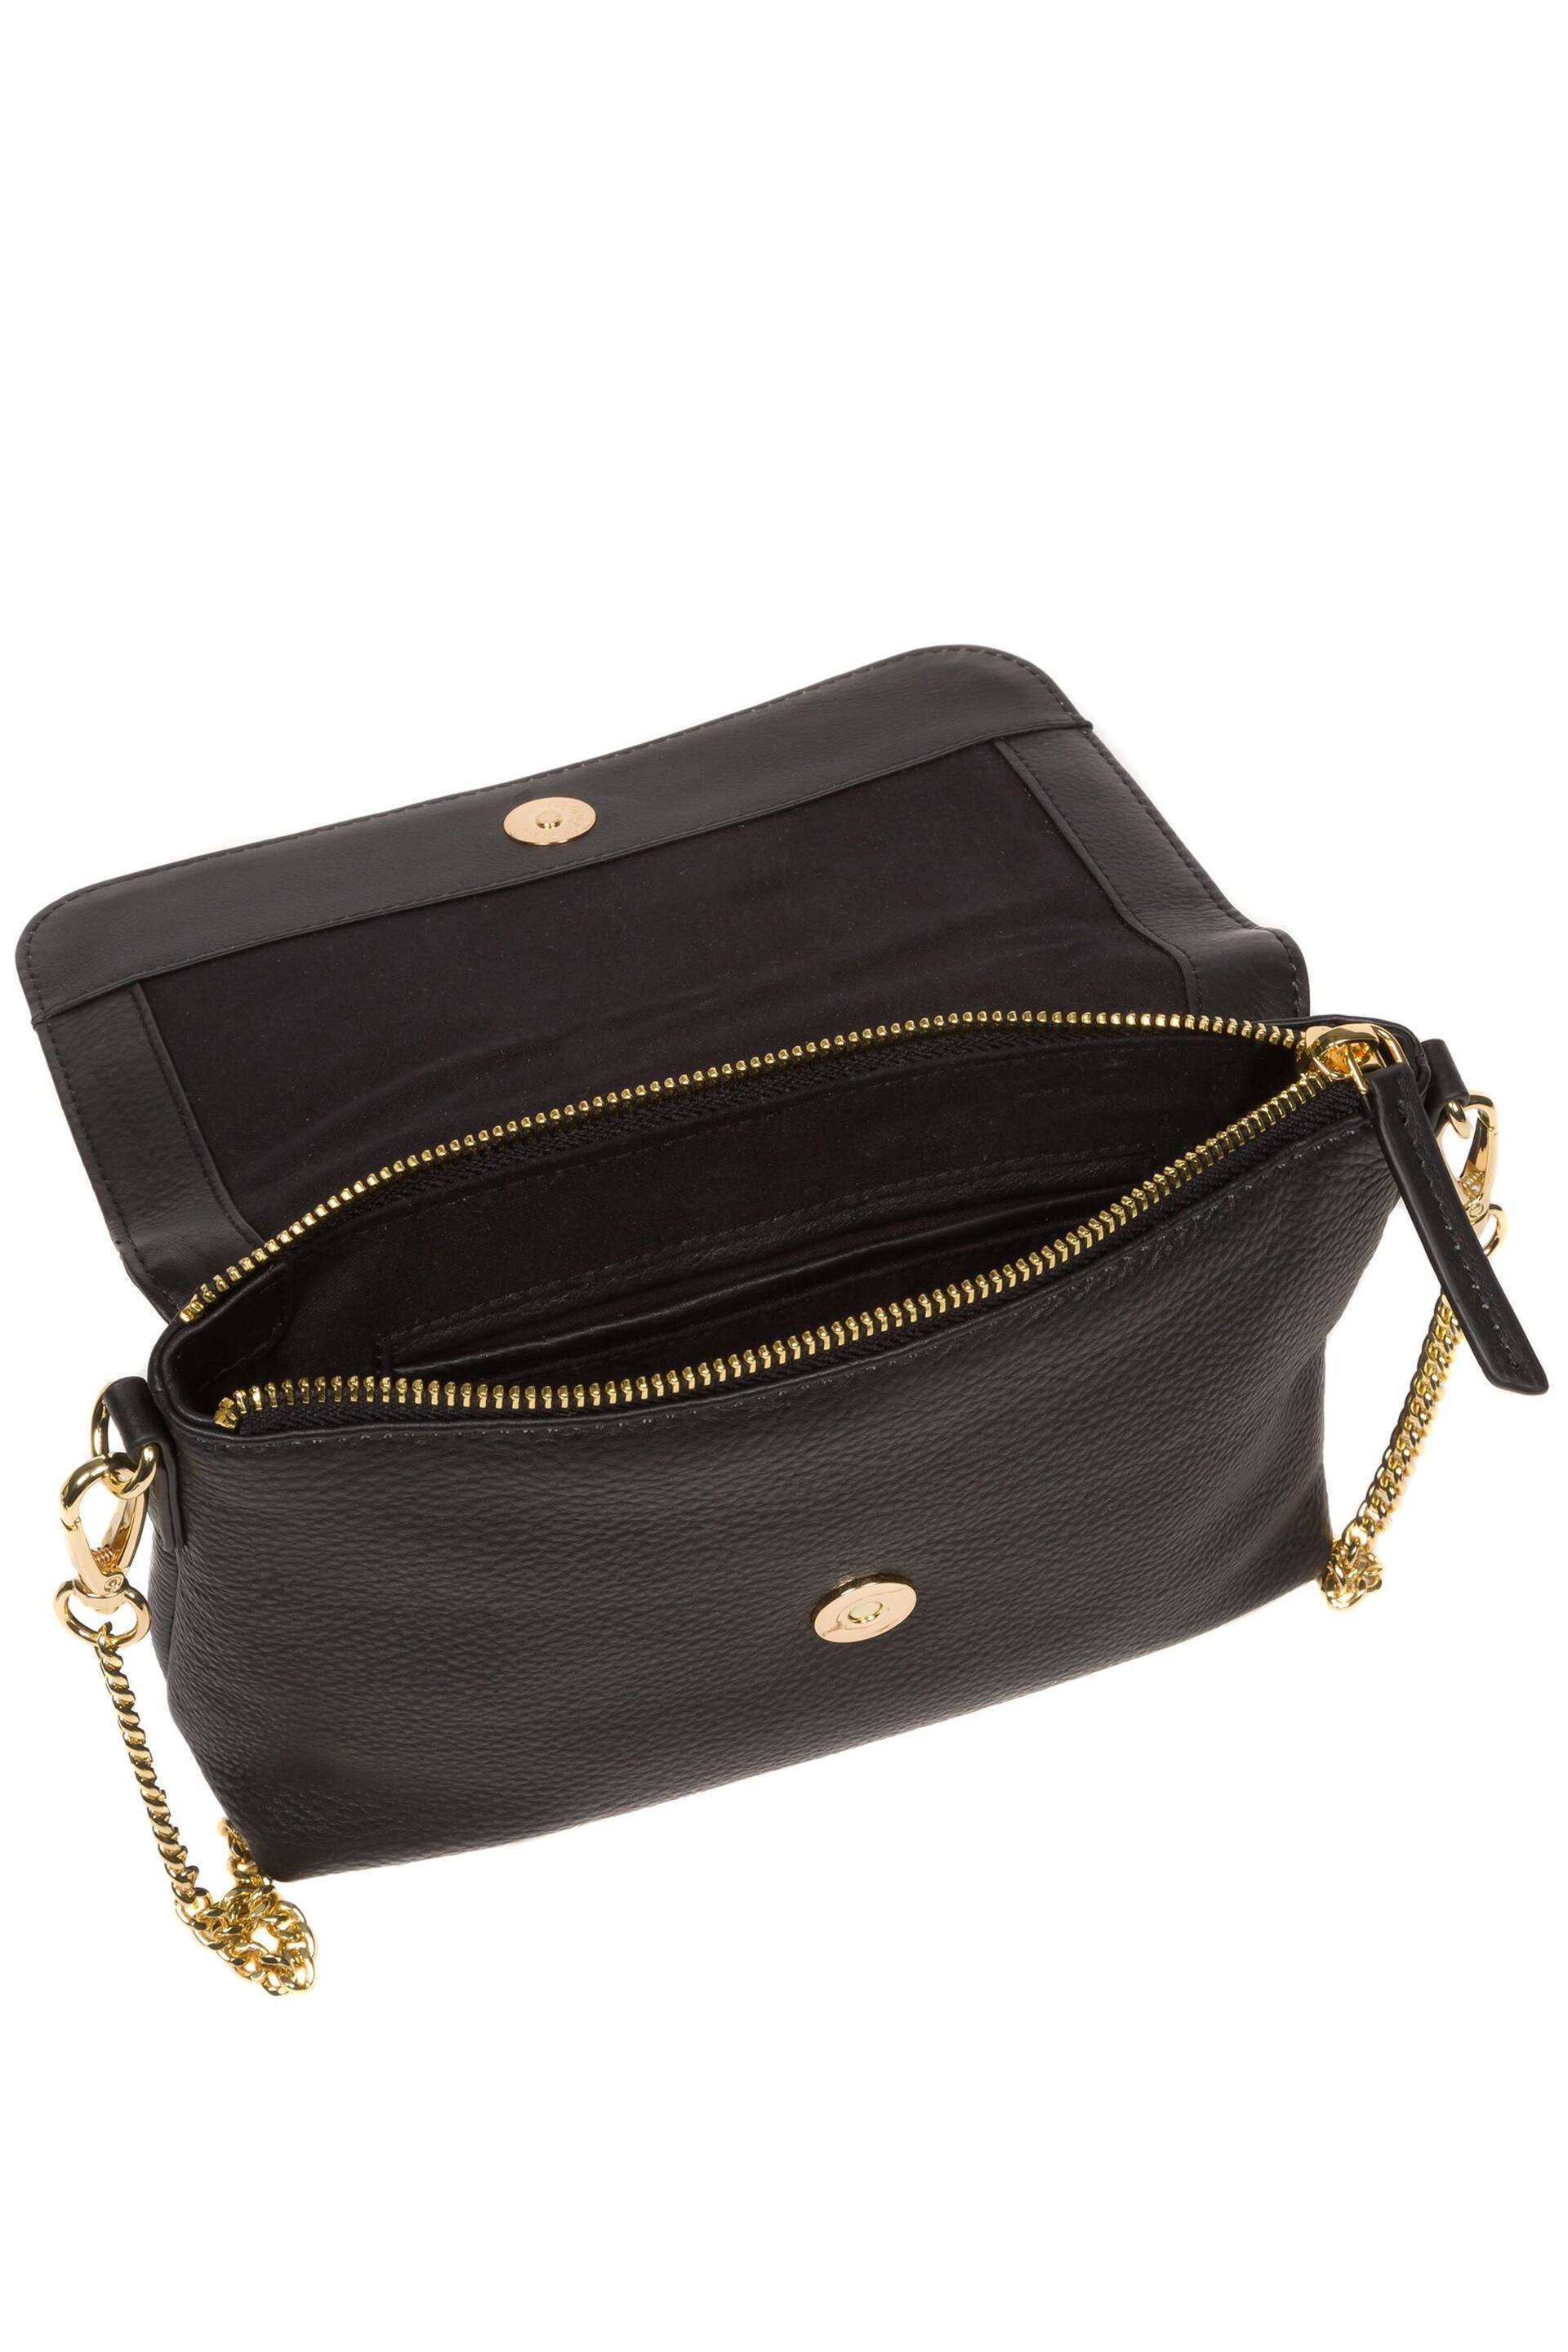 Pure Luxuries London Jazmine Nappa Leather Grab Clutch Bag - Image 5 of 8